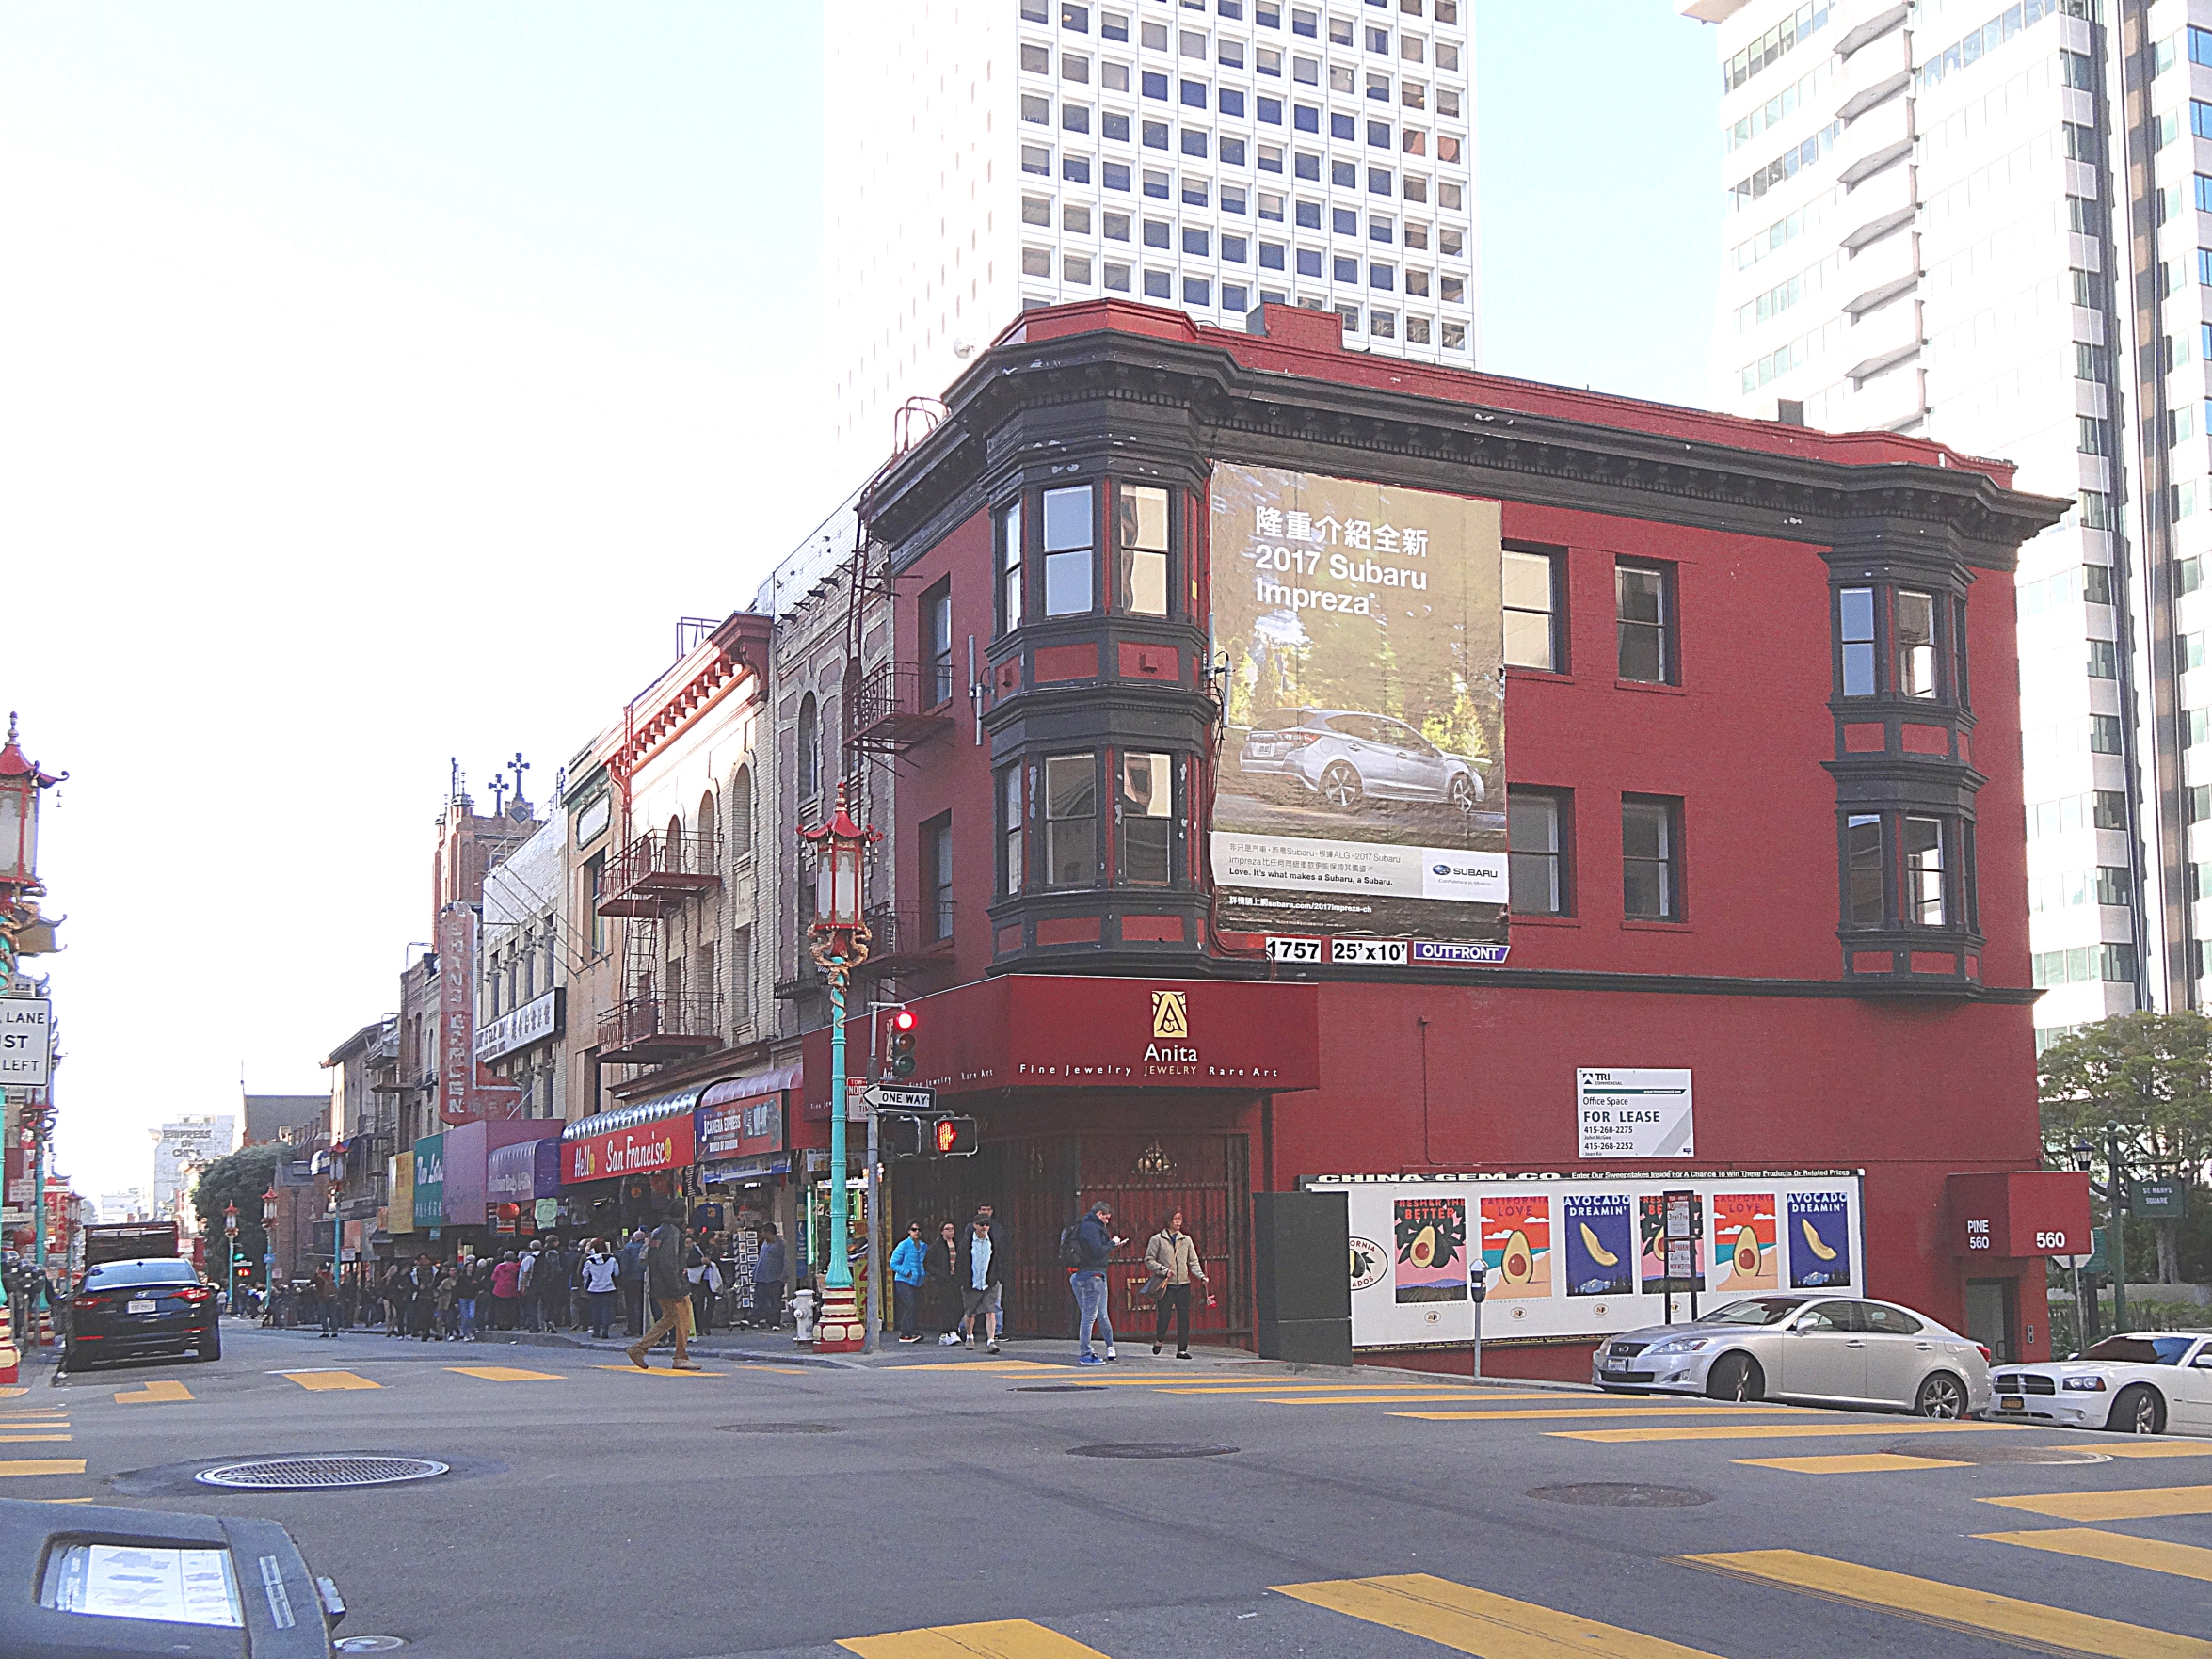 Улица в Чайна-тауне Сан-Франциско. Фото Морошкина В.В.